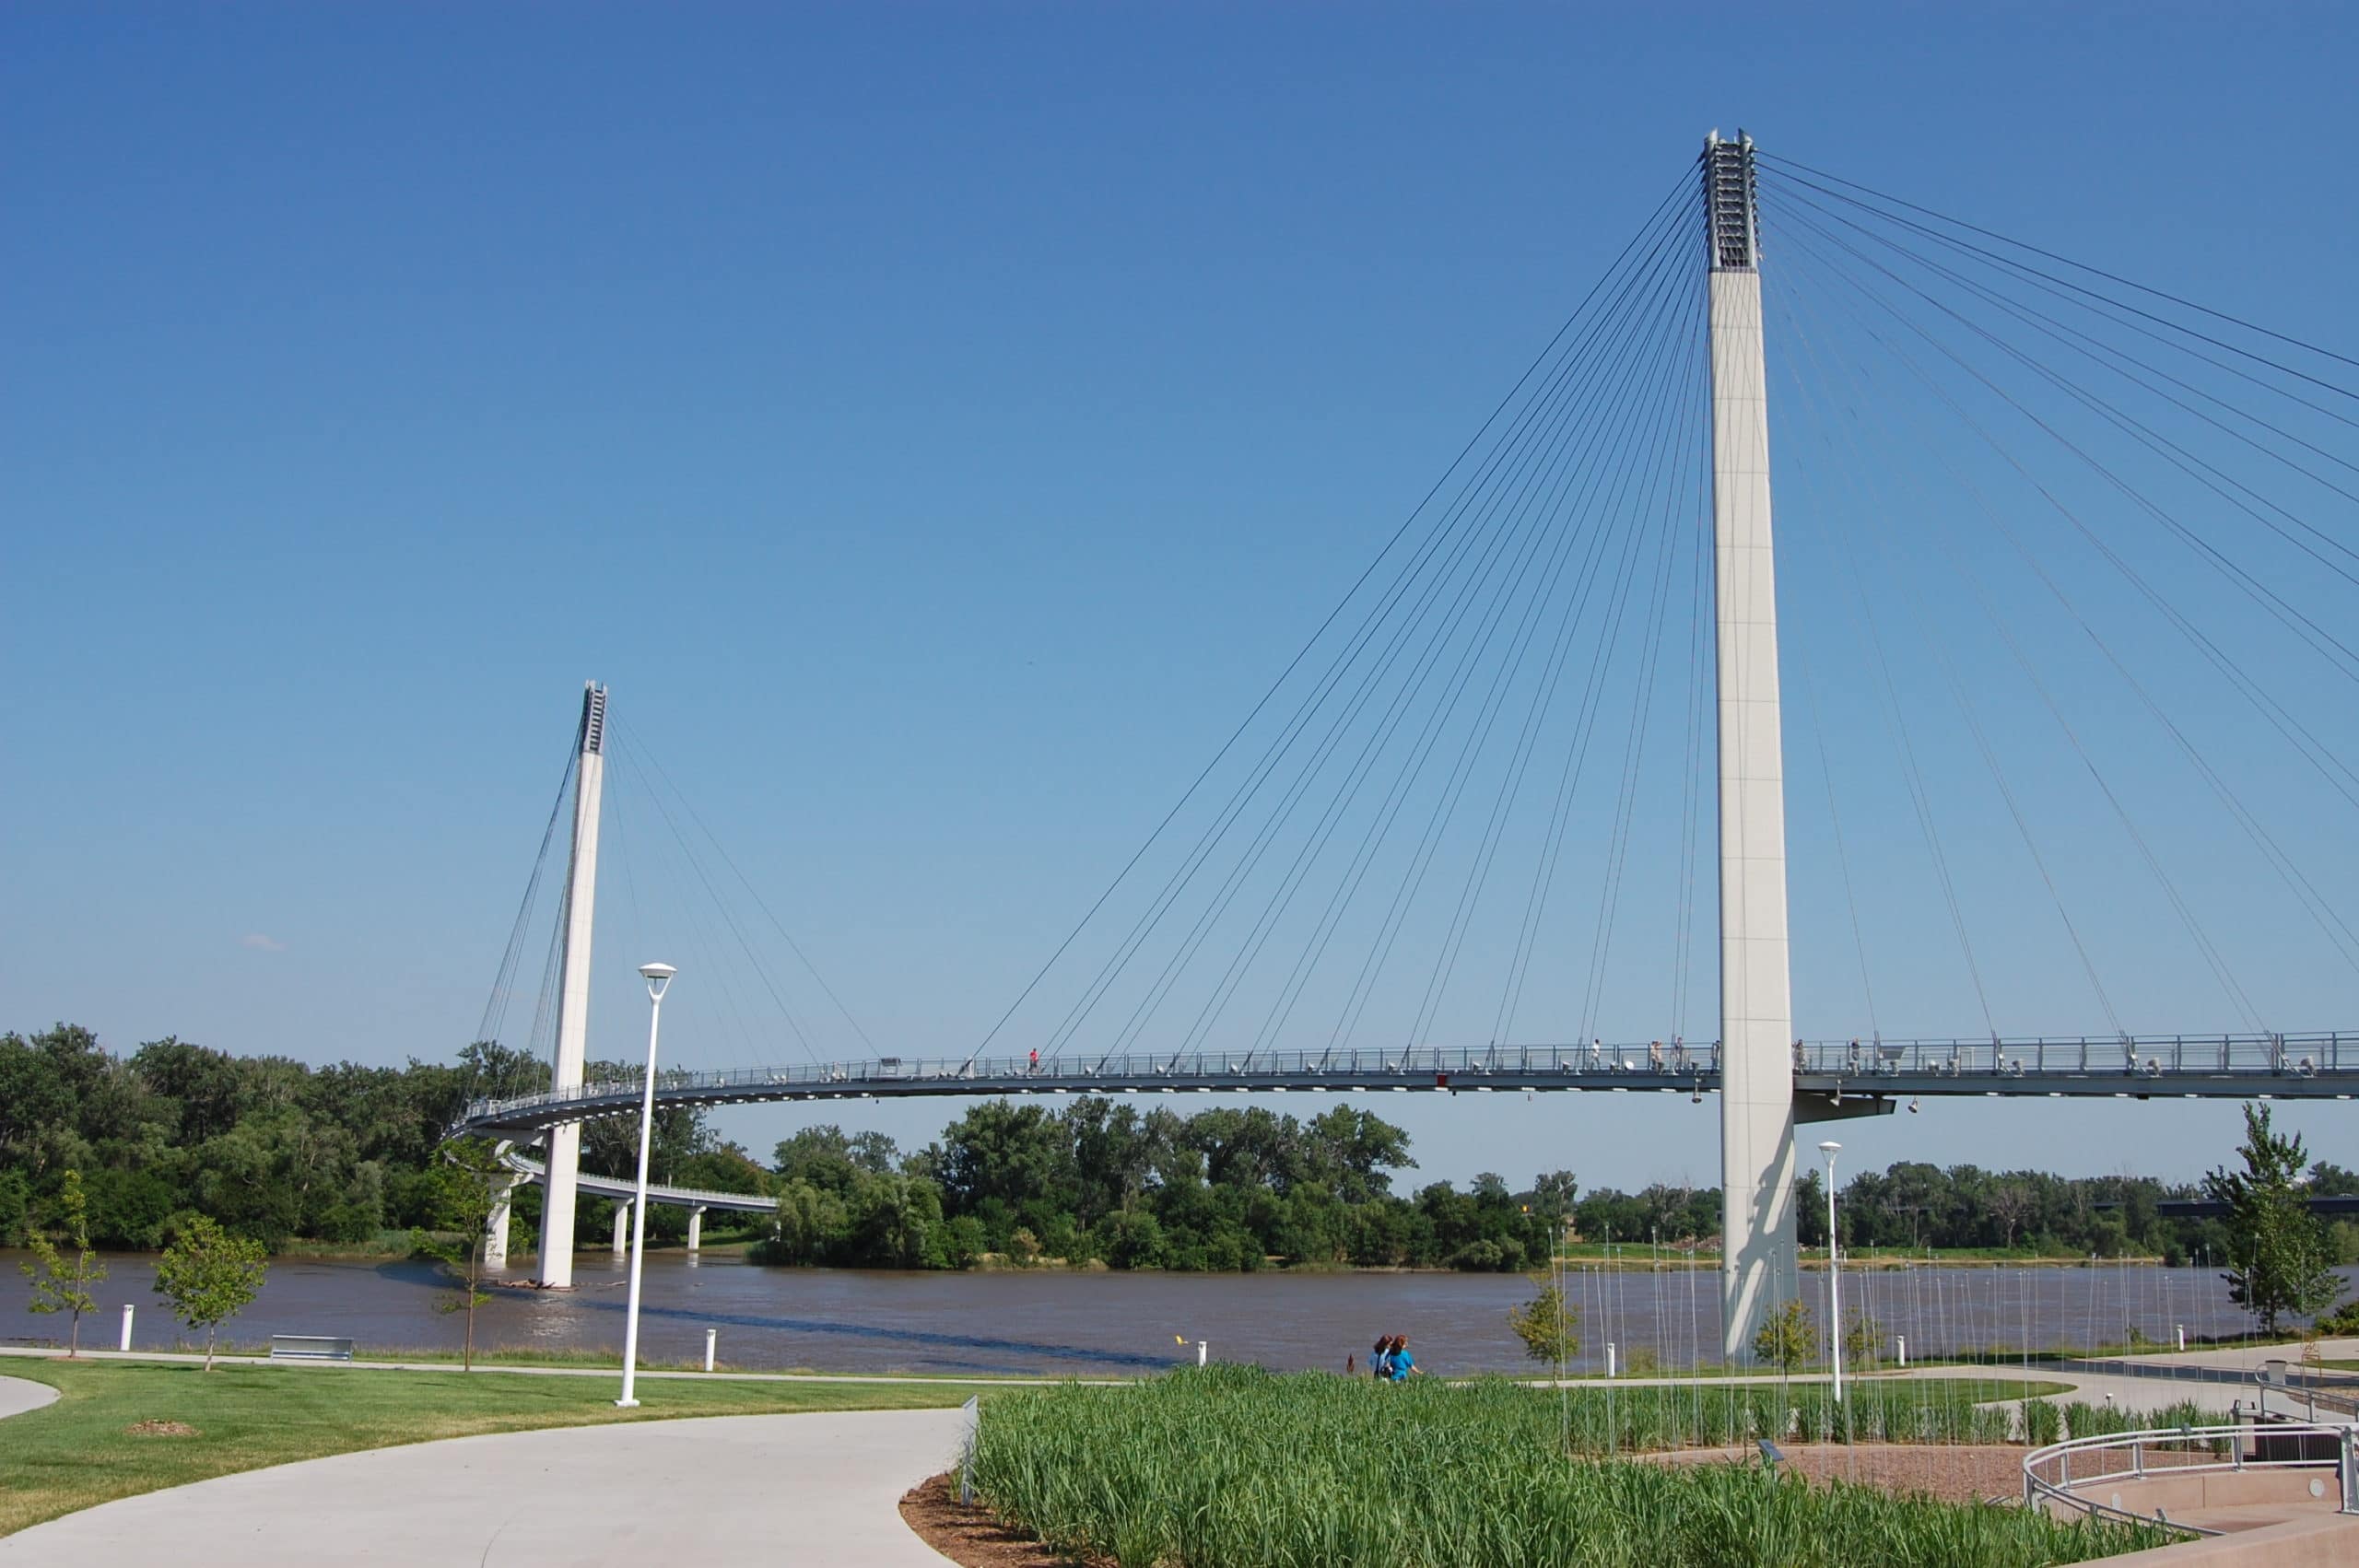 Nebraska side of the Bob Kerrey Pedestrain Bridge over the Missouri river.